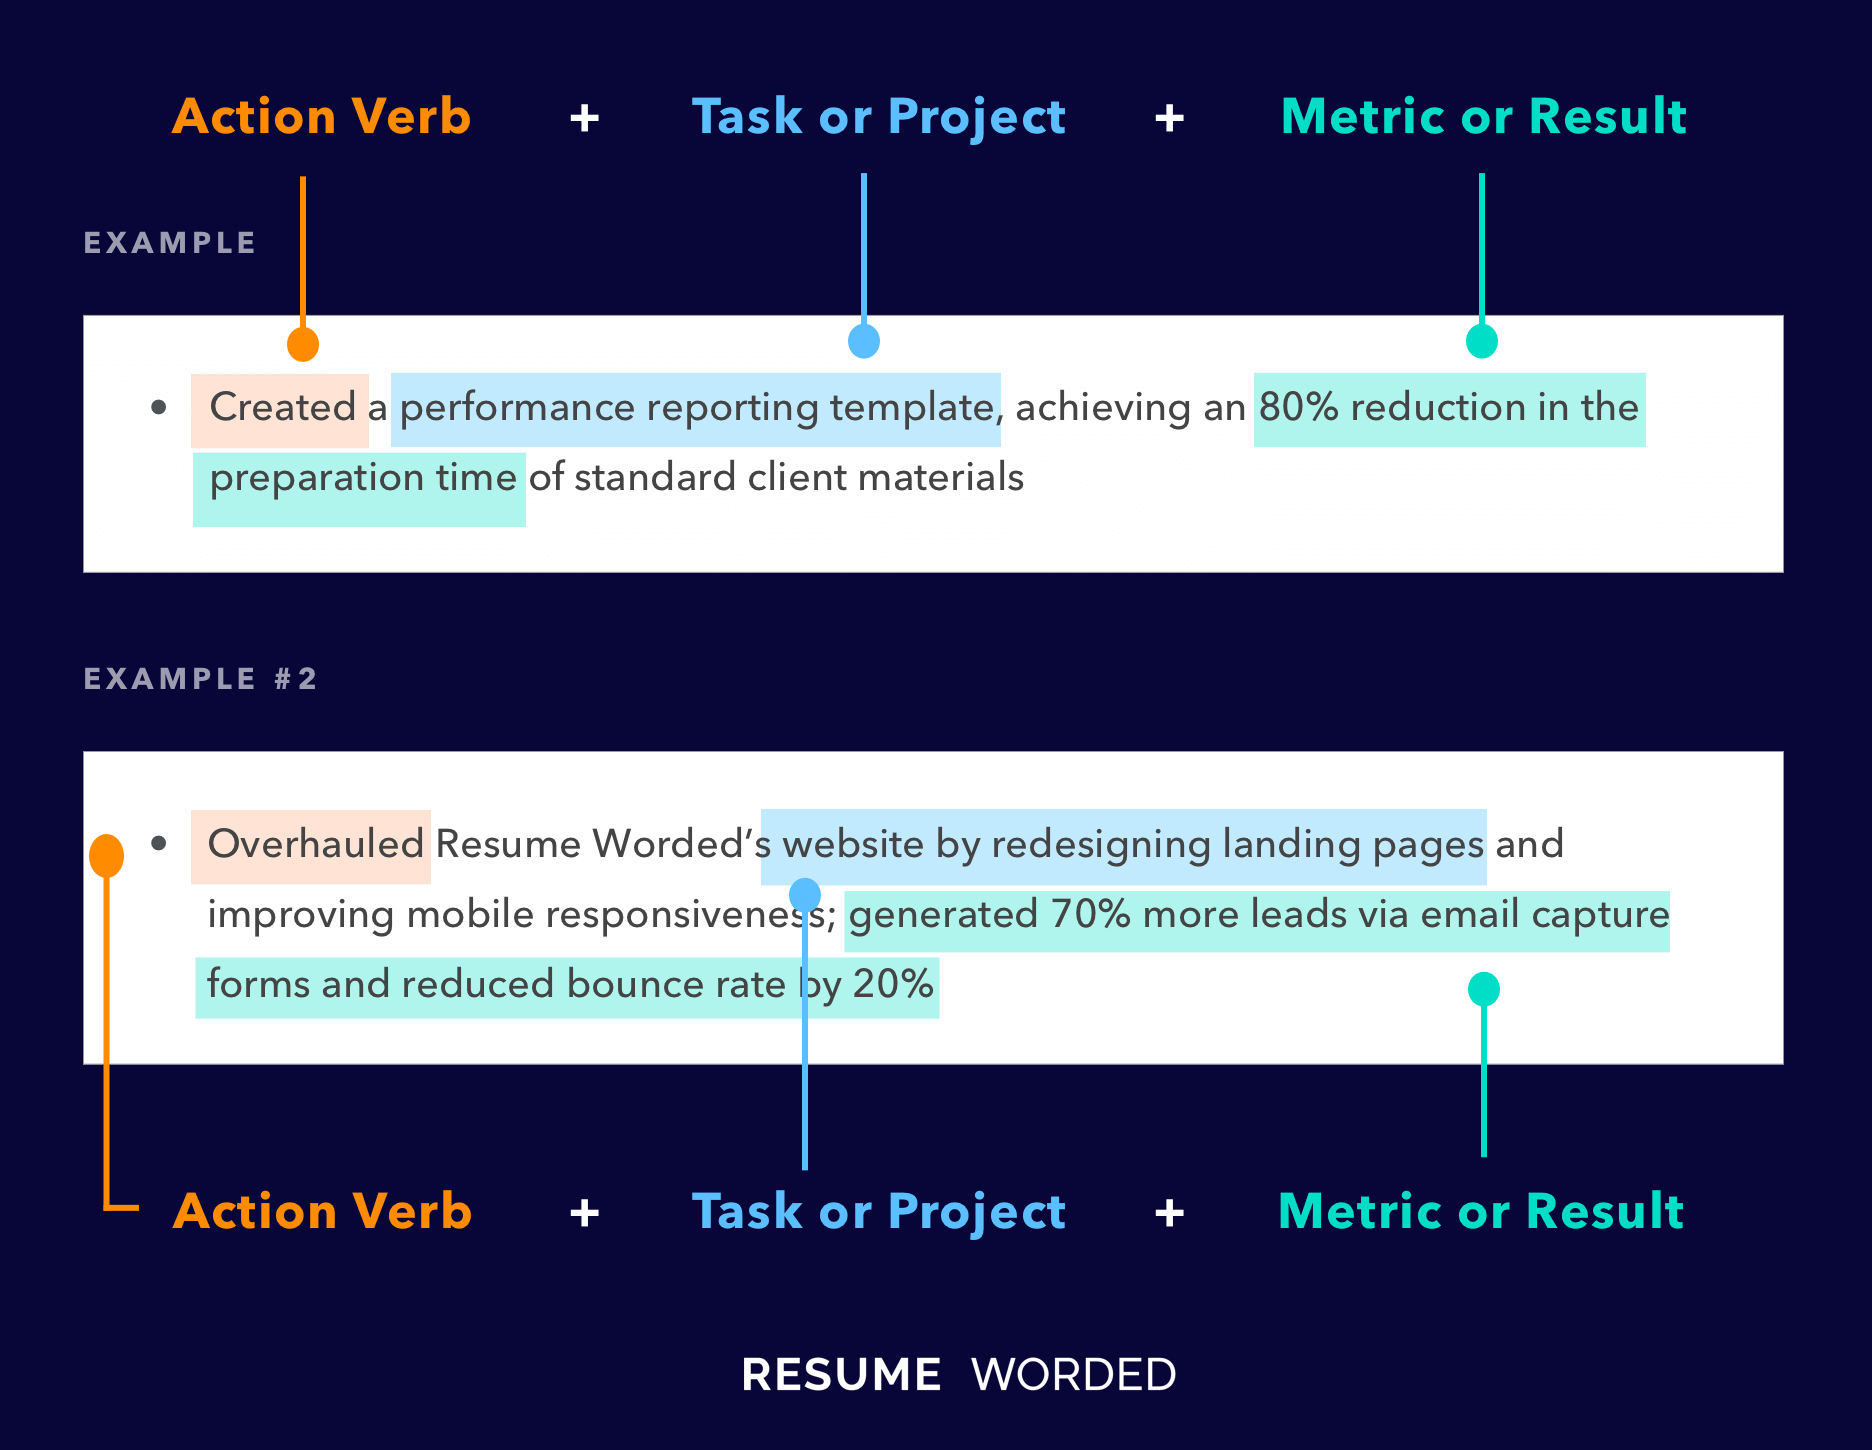 create resume verbs